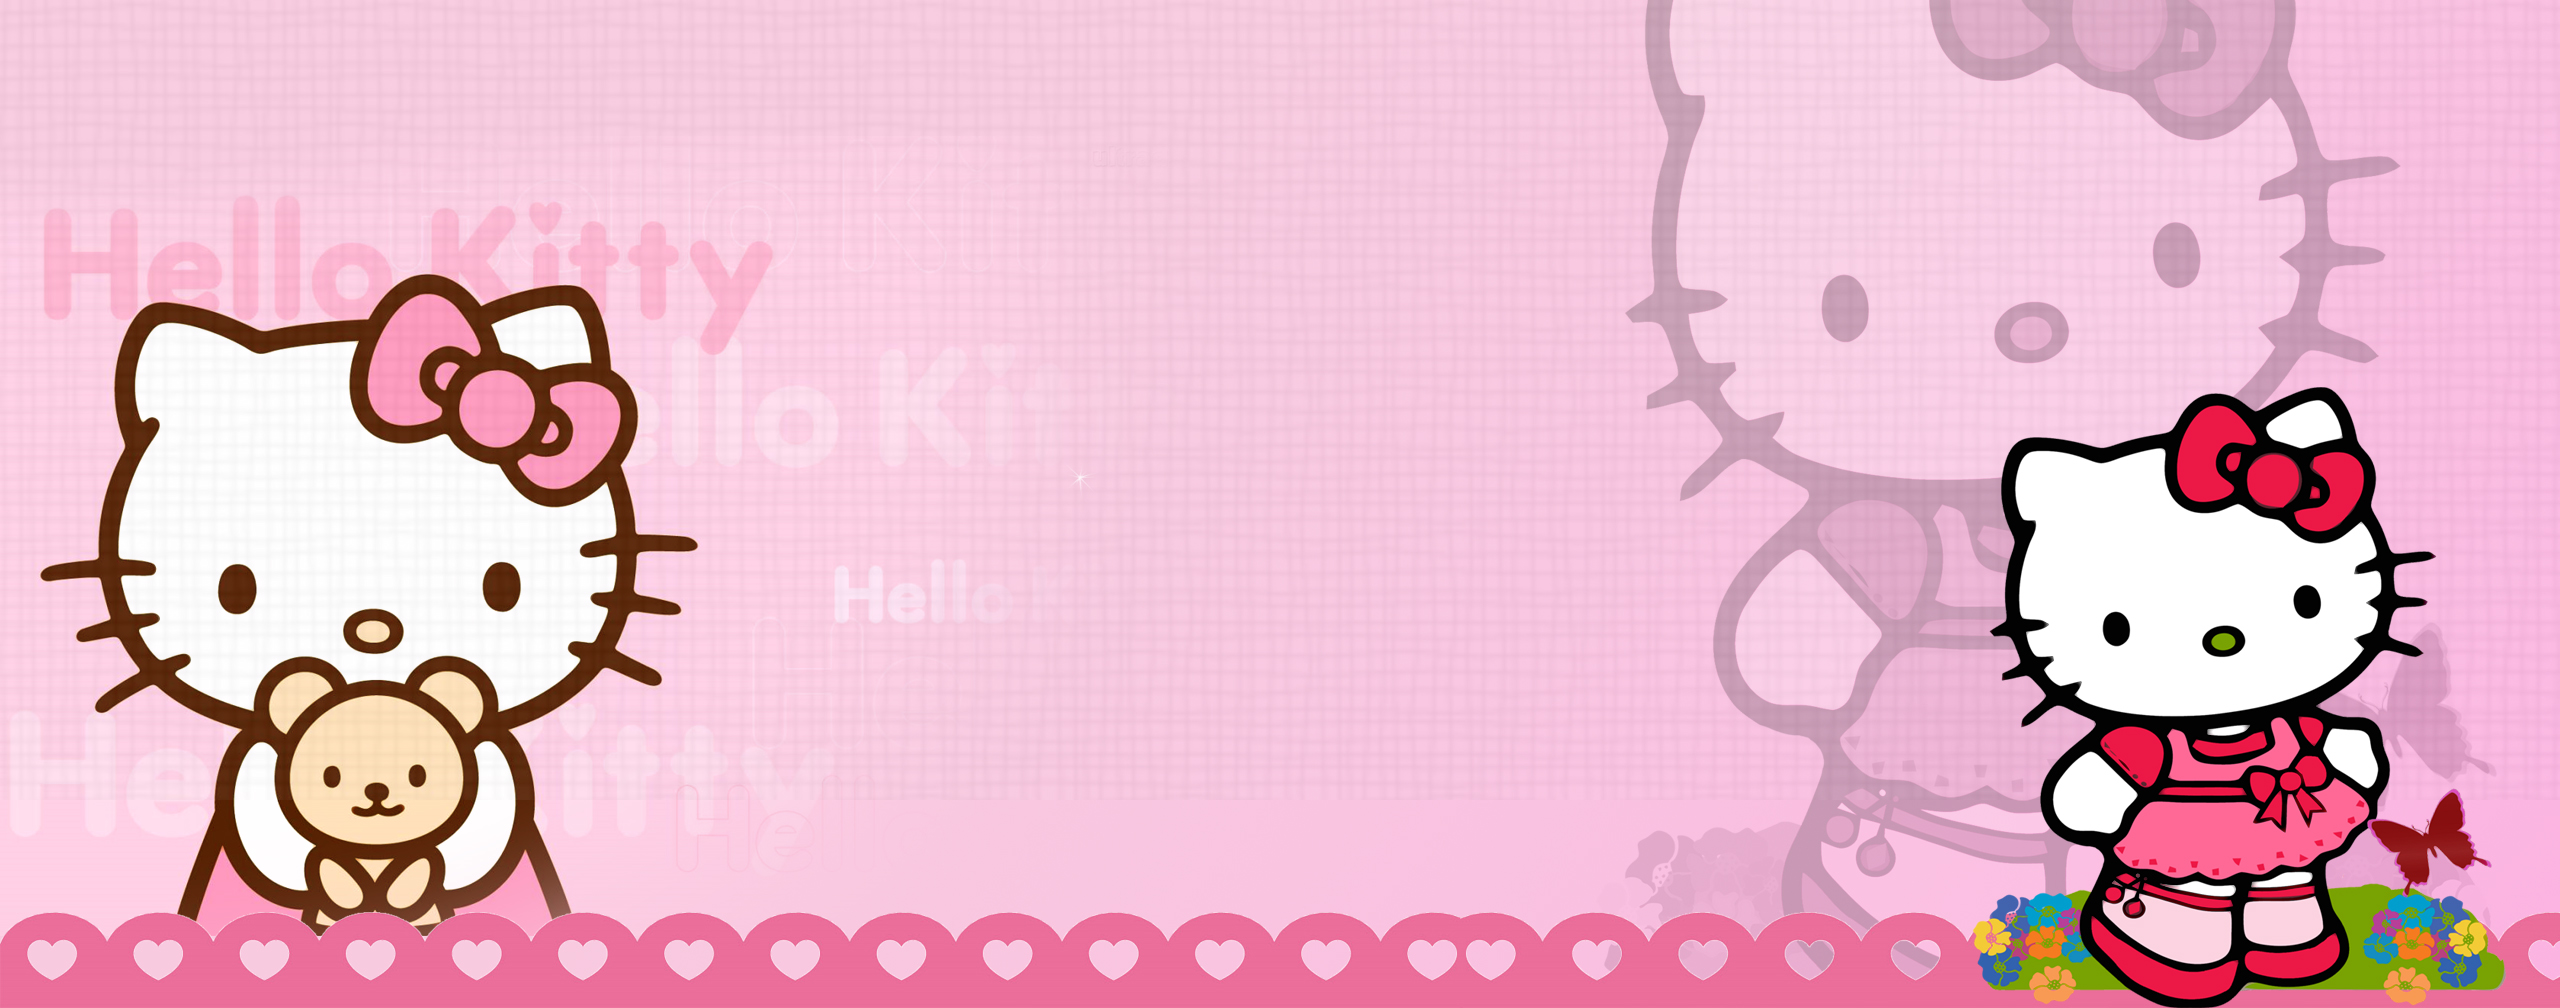 Download Hello Kitty Dual Monitor Wallp Brh Deviantart Wallpaper ...